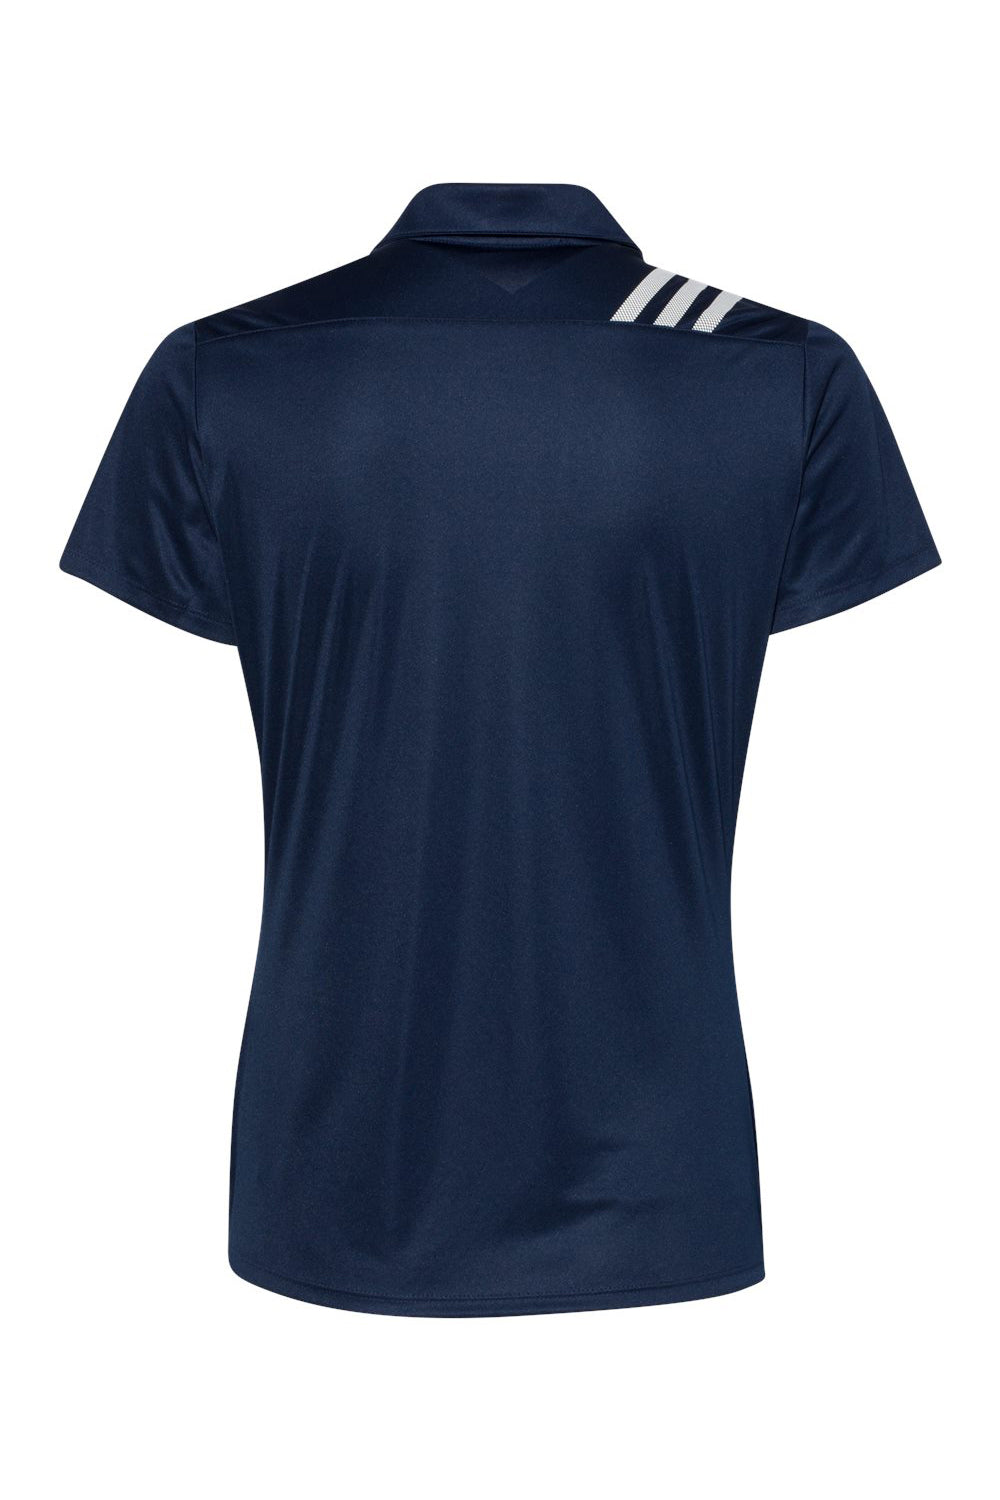 Adidas A325 Womens 3 Stripes UPF 50+ Short Sleeve Polo Shirt Collegiate Navy Blue/White Flat Back